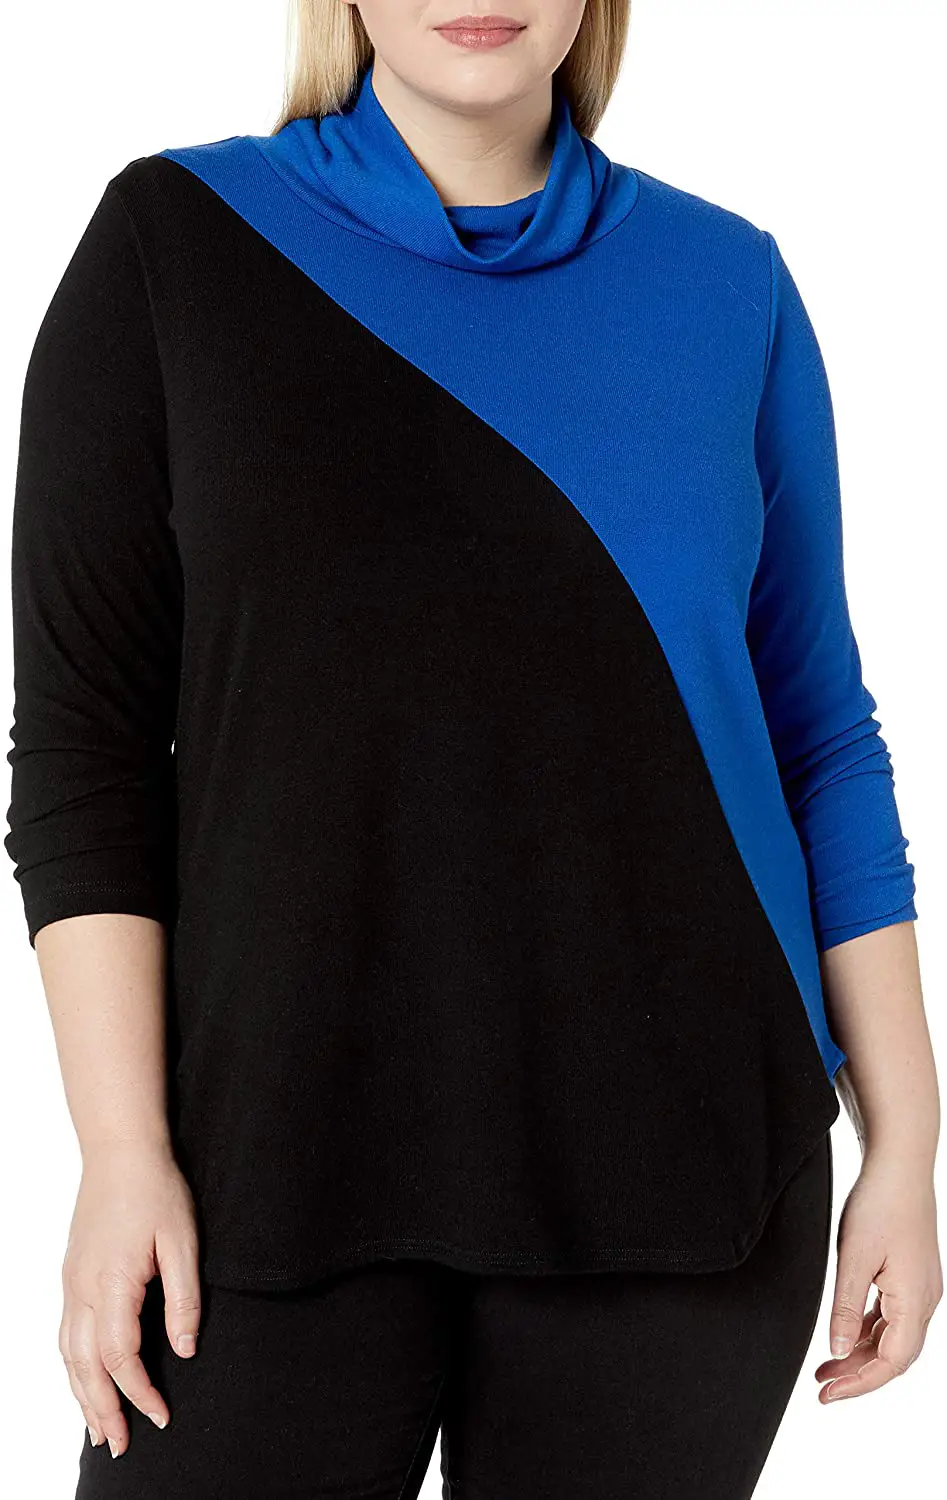 Plus Size Turtleneck Sweater 06